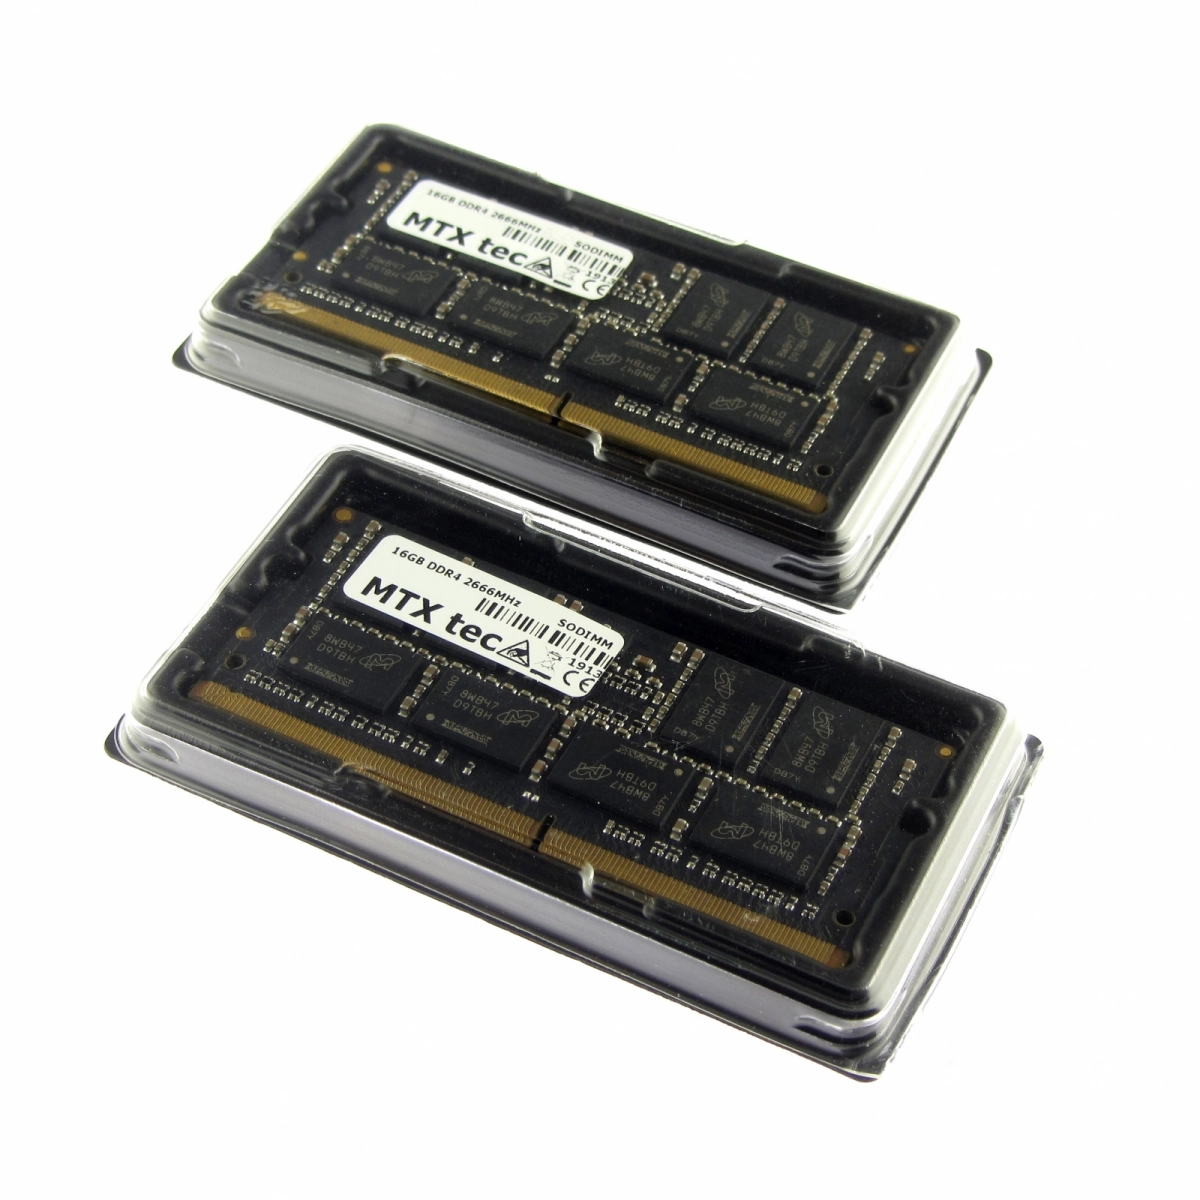 MTXtec 32GB Kit 2x16GB Notebook Arbeitsspeicher SODIMM DDR4 PC4-21300 2666MHz 260pin